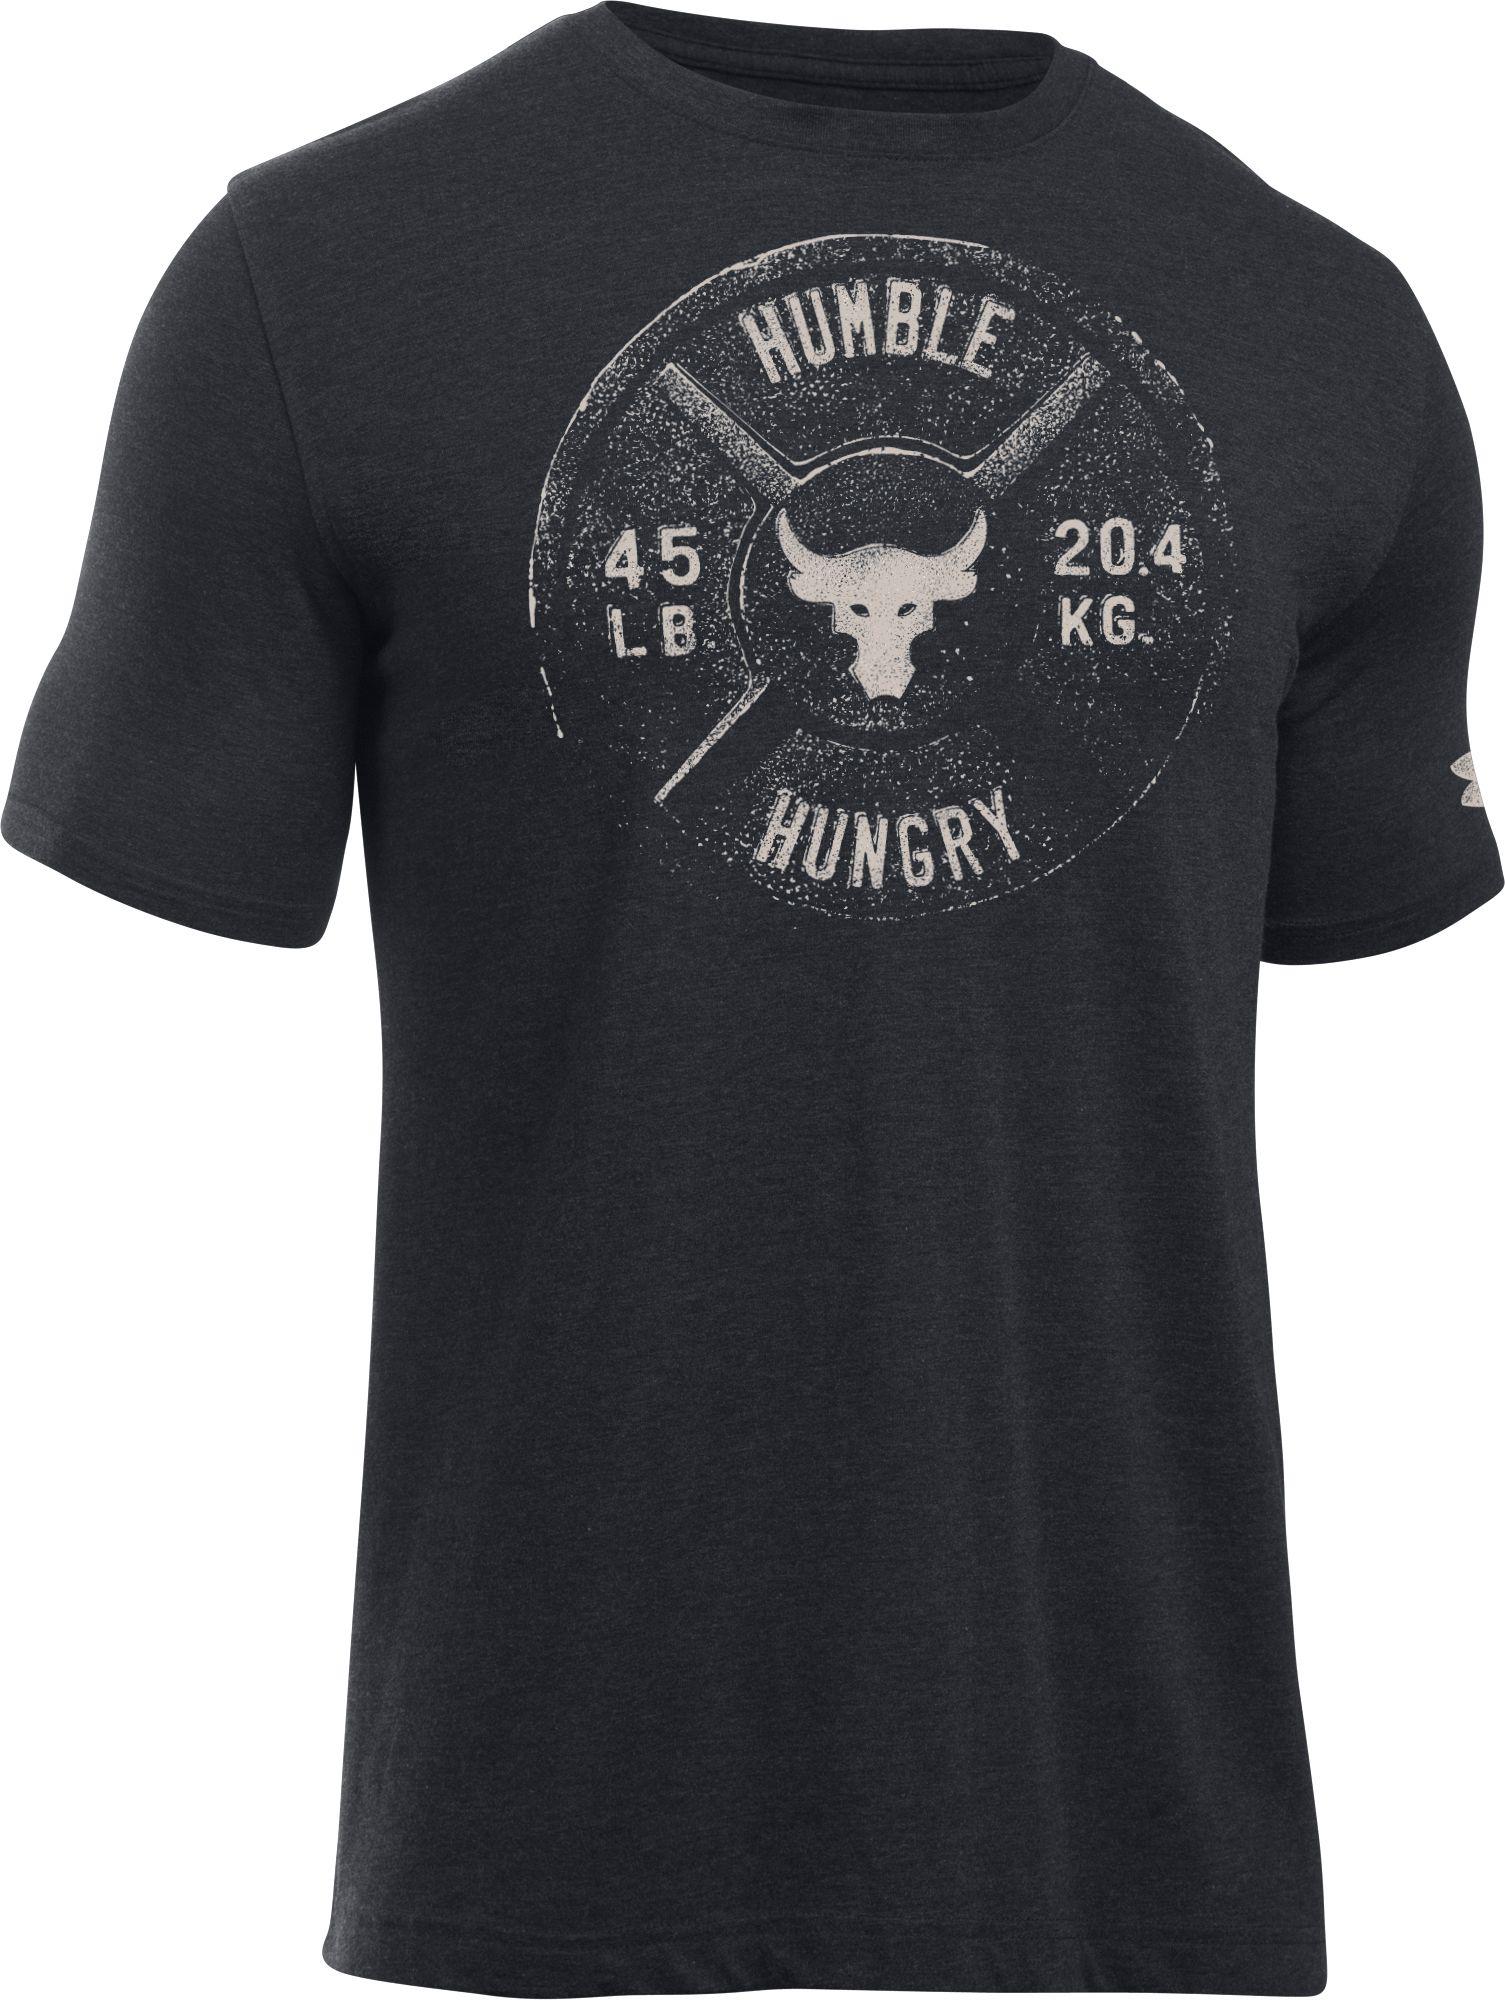 humble hungry shirt